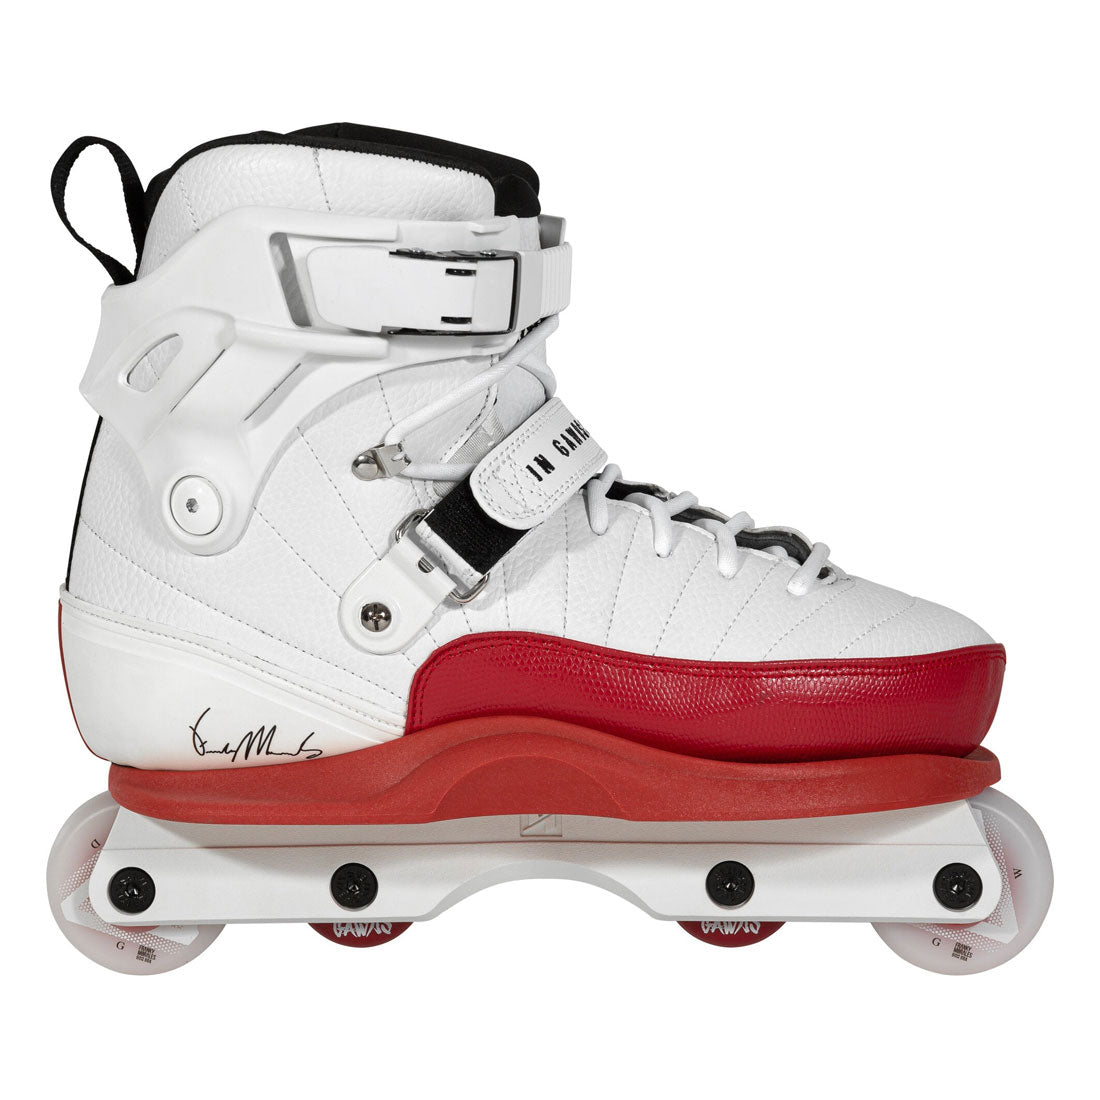 Gawds Franky Morales III Skates - White/Red Inline Aggressive Skates